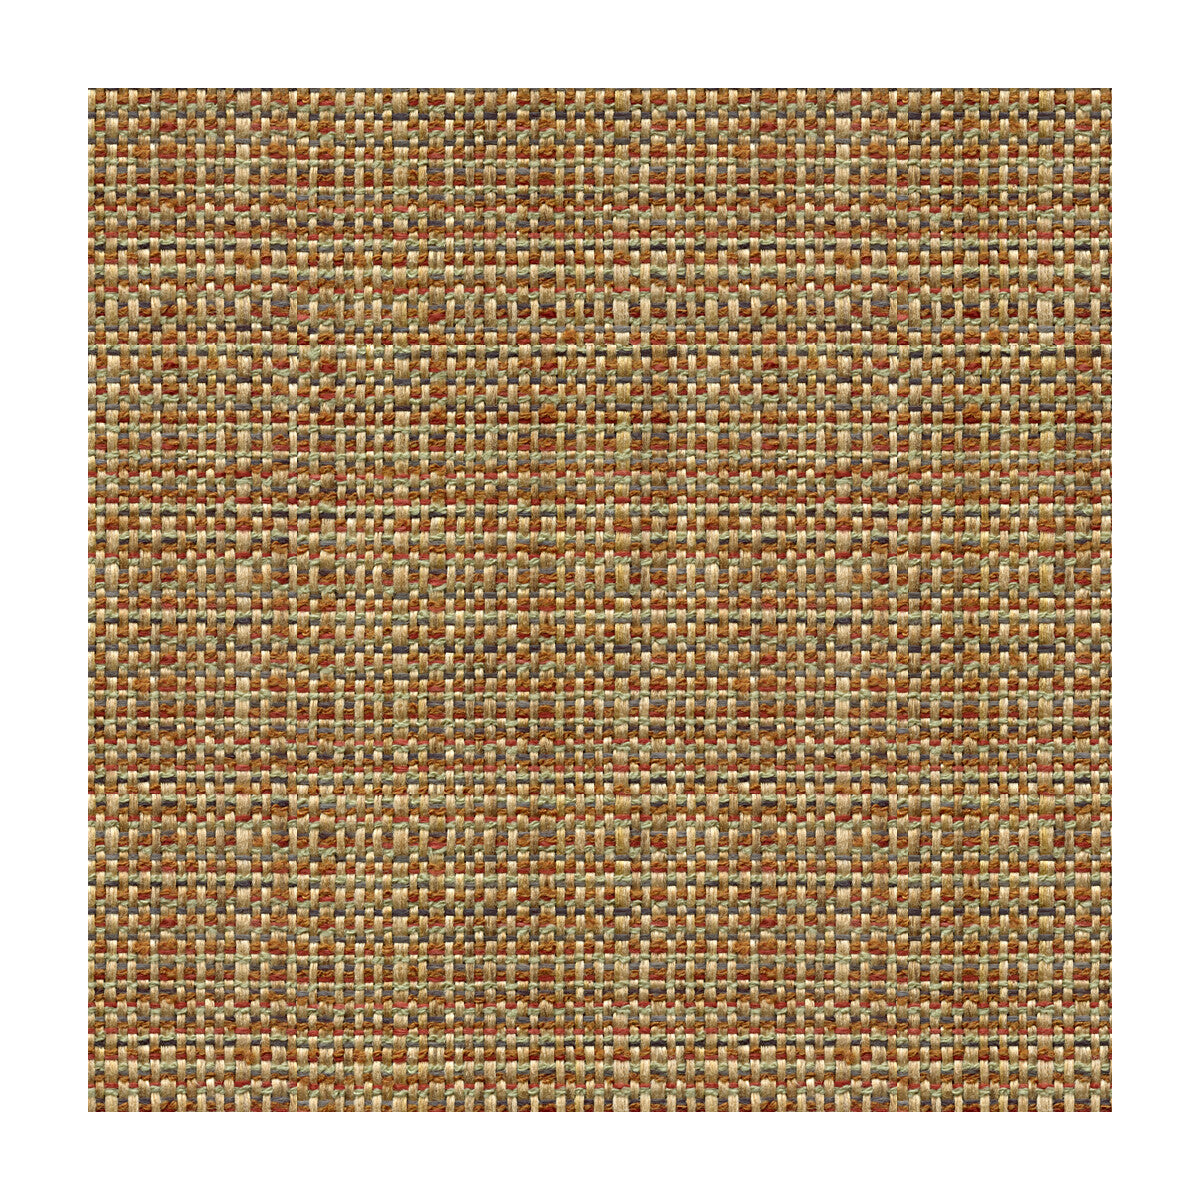 Kravet Smart fabric in 30667-916 color - pattern 30667.916.0 - by Kravet Smart